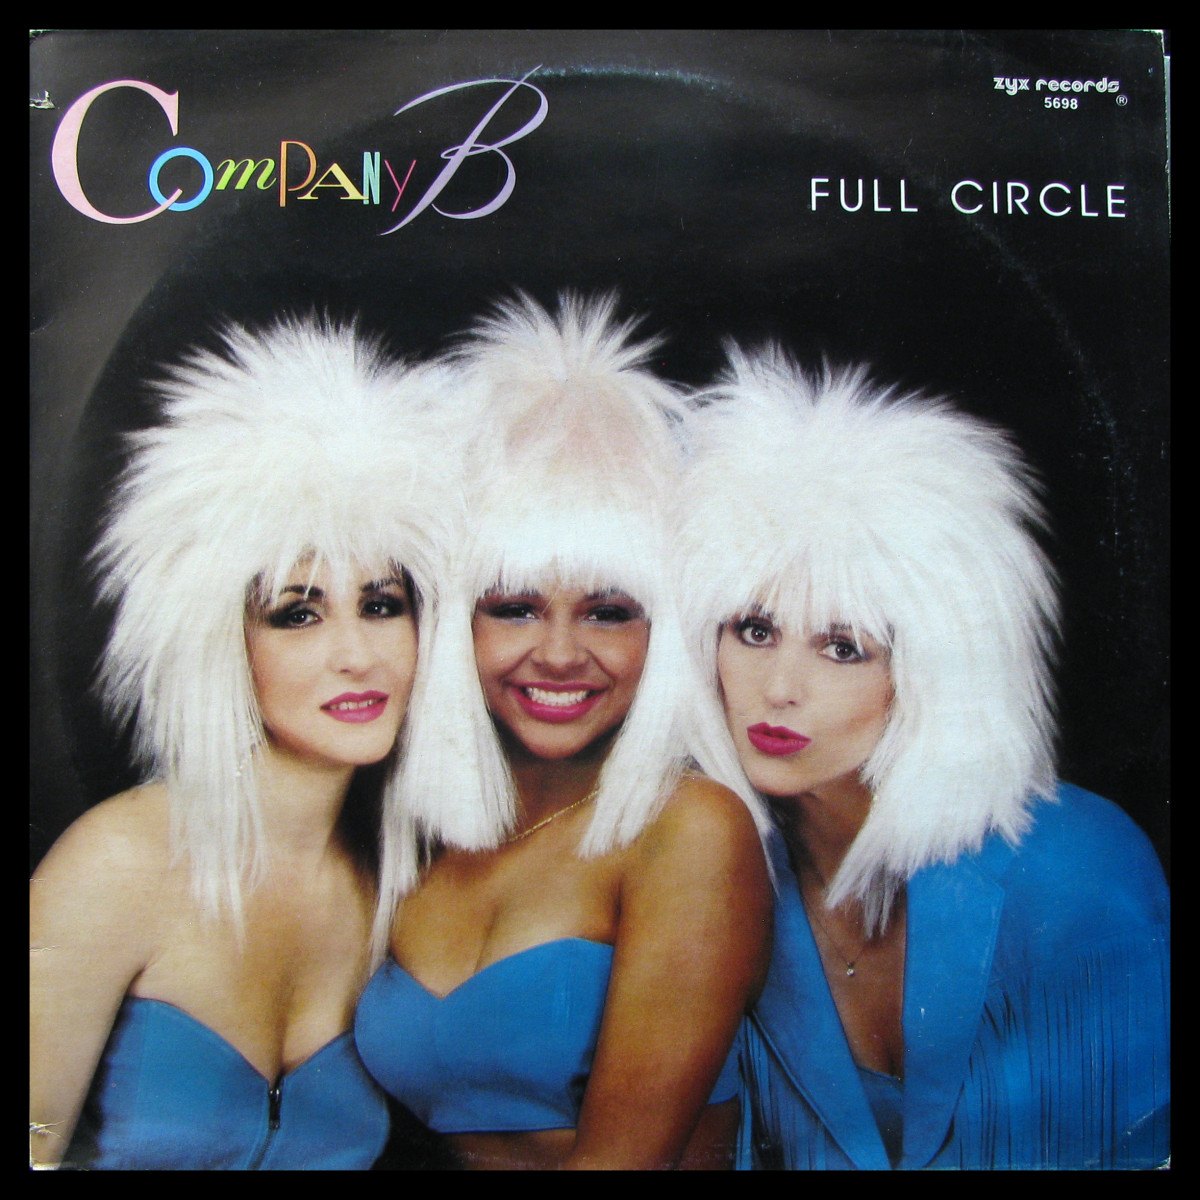 LP Company B — Full Circle (maxi) фото